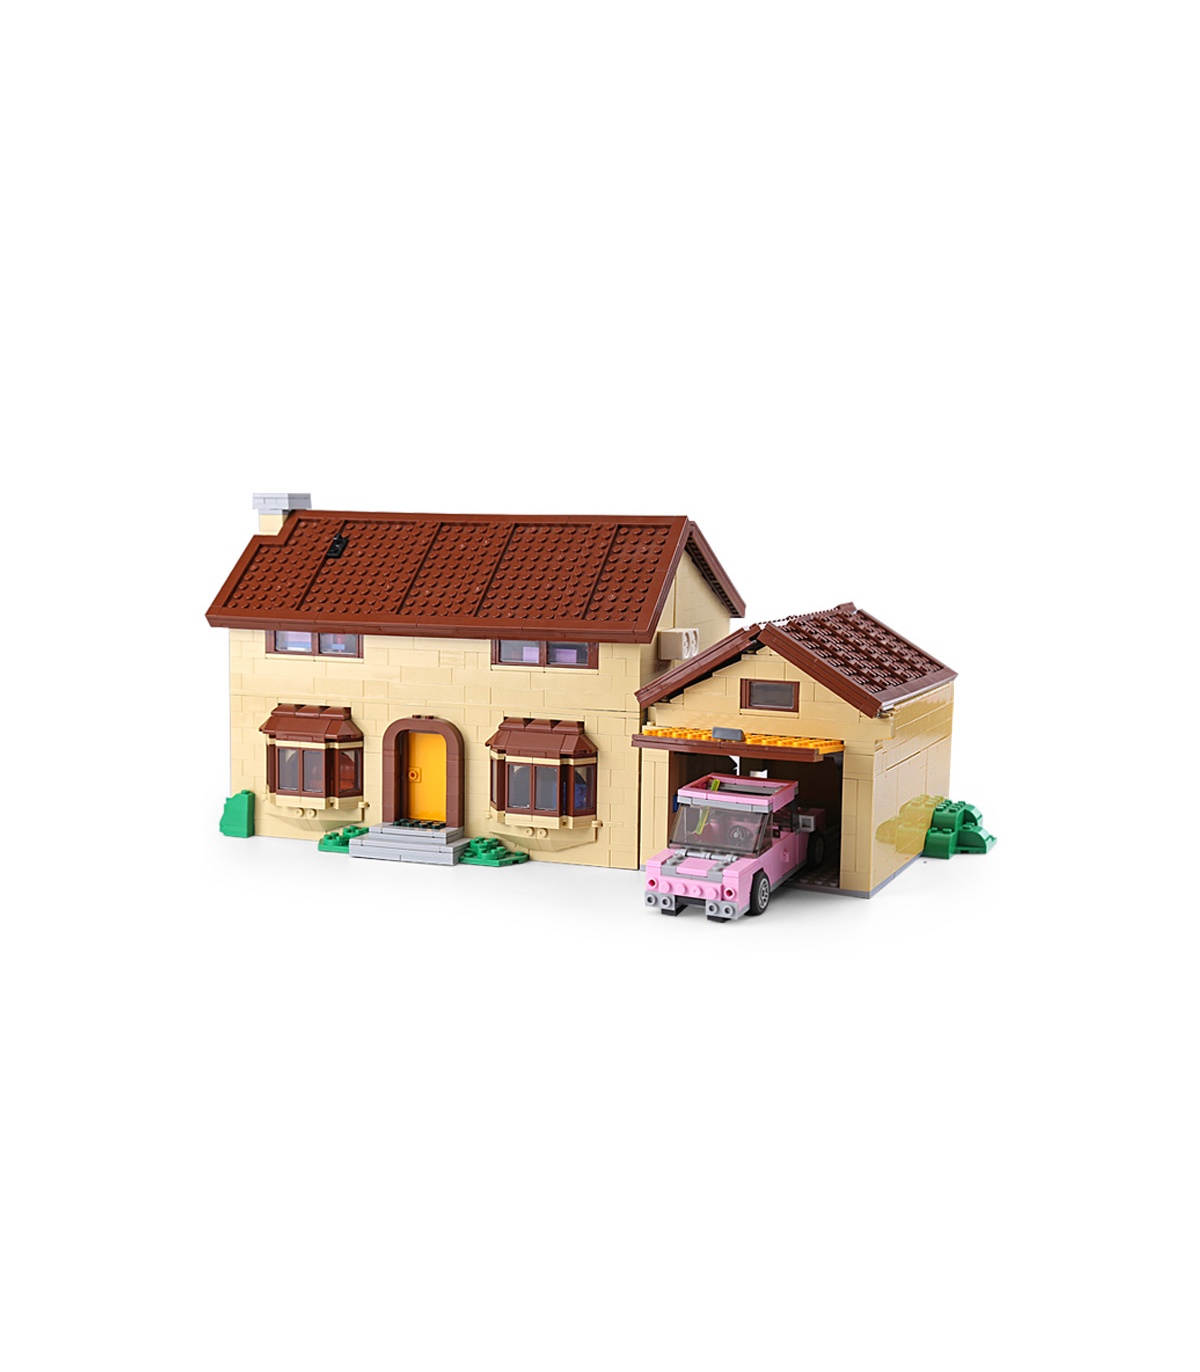 The Simpsons House Compatible Building Blocks Replica Toys Not Original 